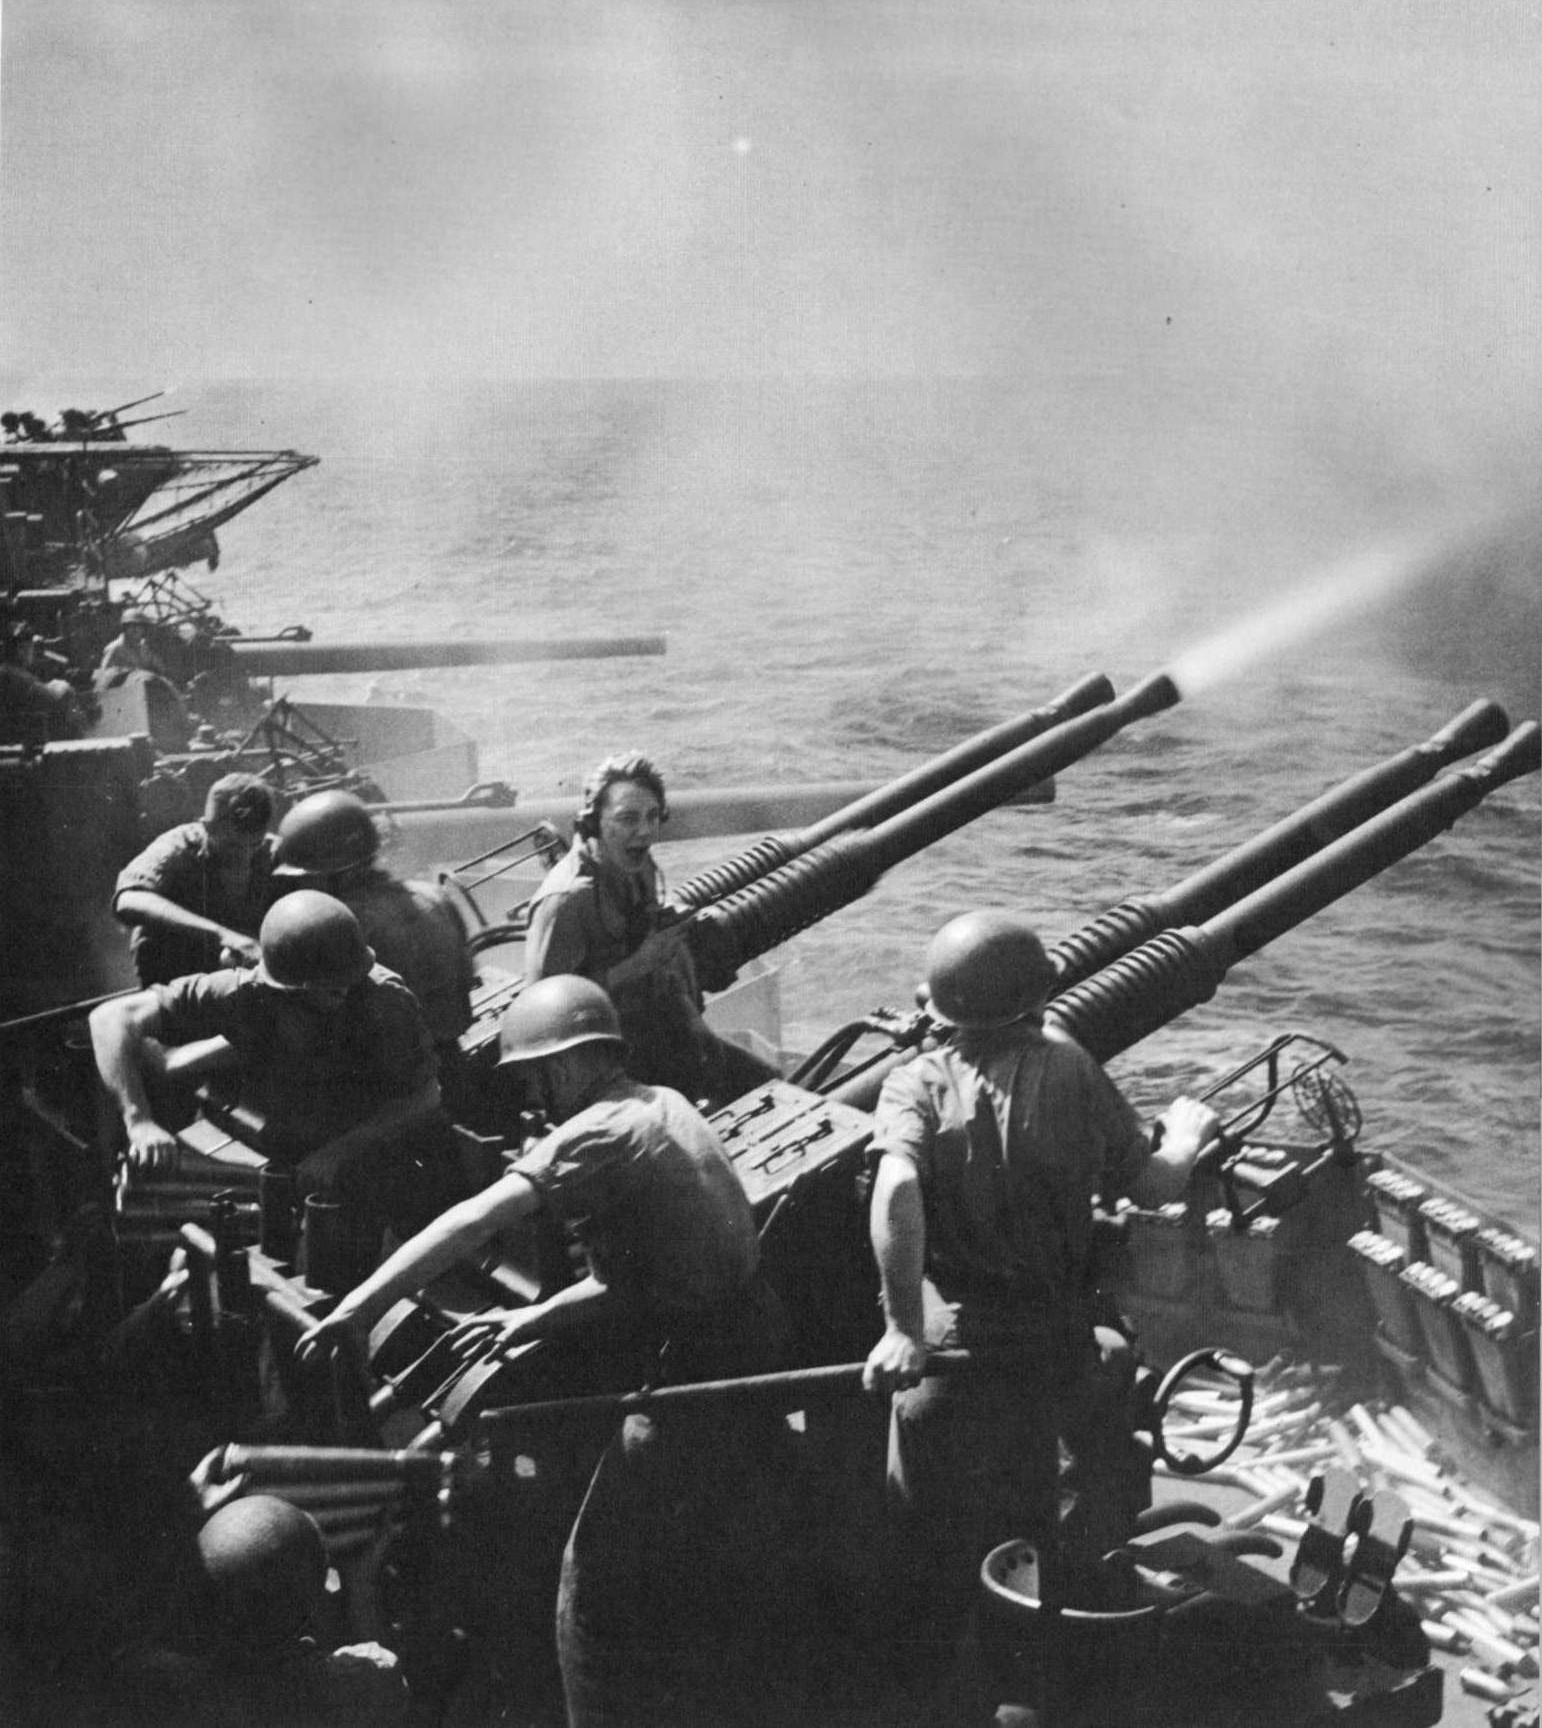 Gunnery practice with 40-mm Bofors MK 12 anti-aircraft guns aboard Hornet while her aircraft raided Japan, 16 Feb 1945